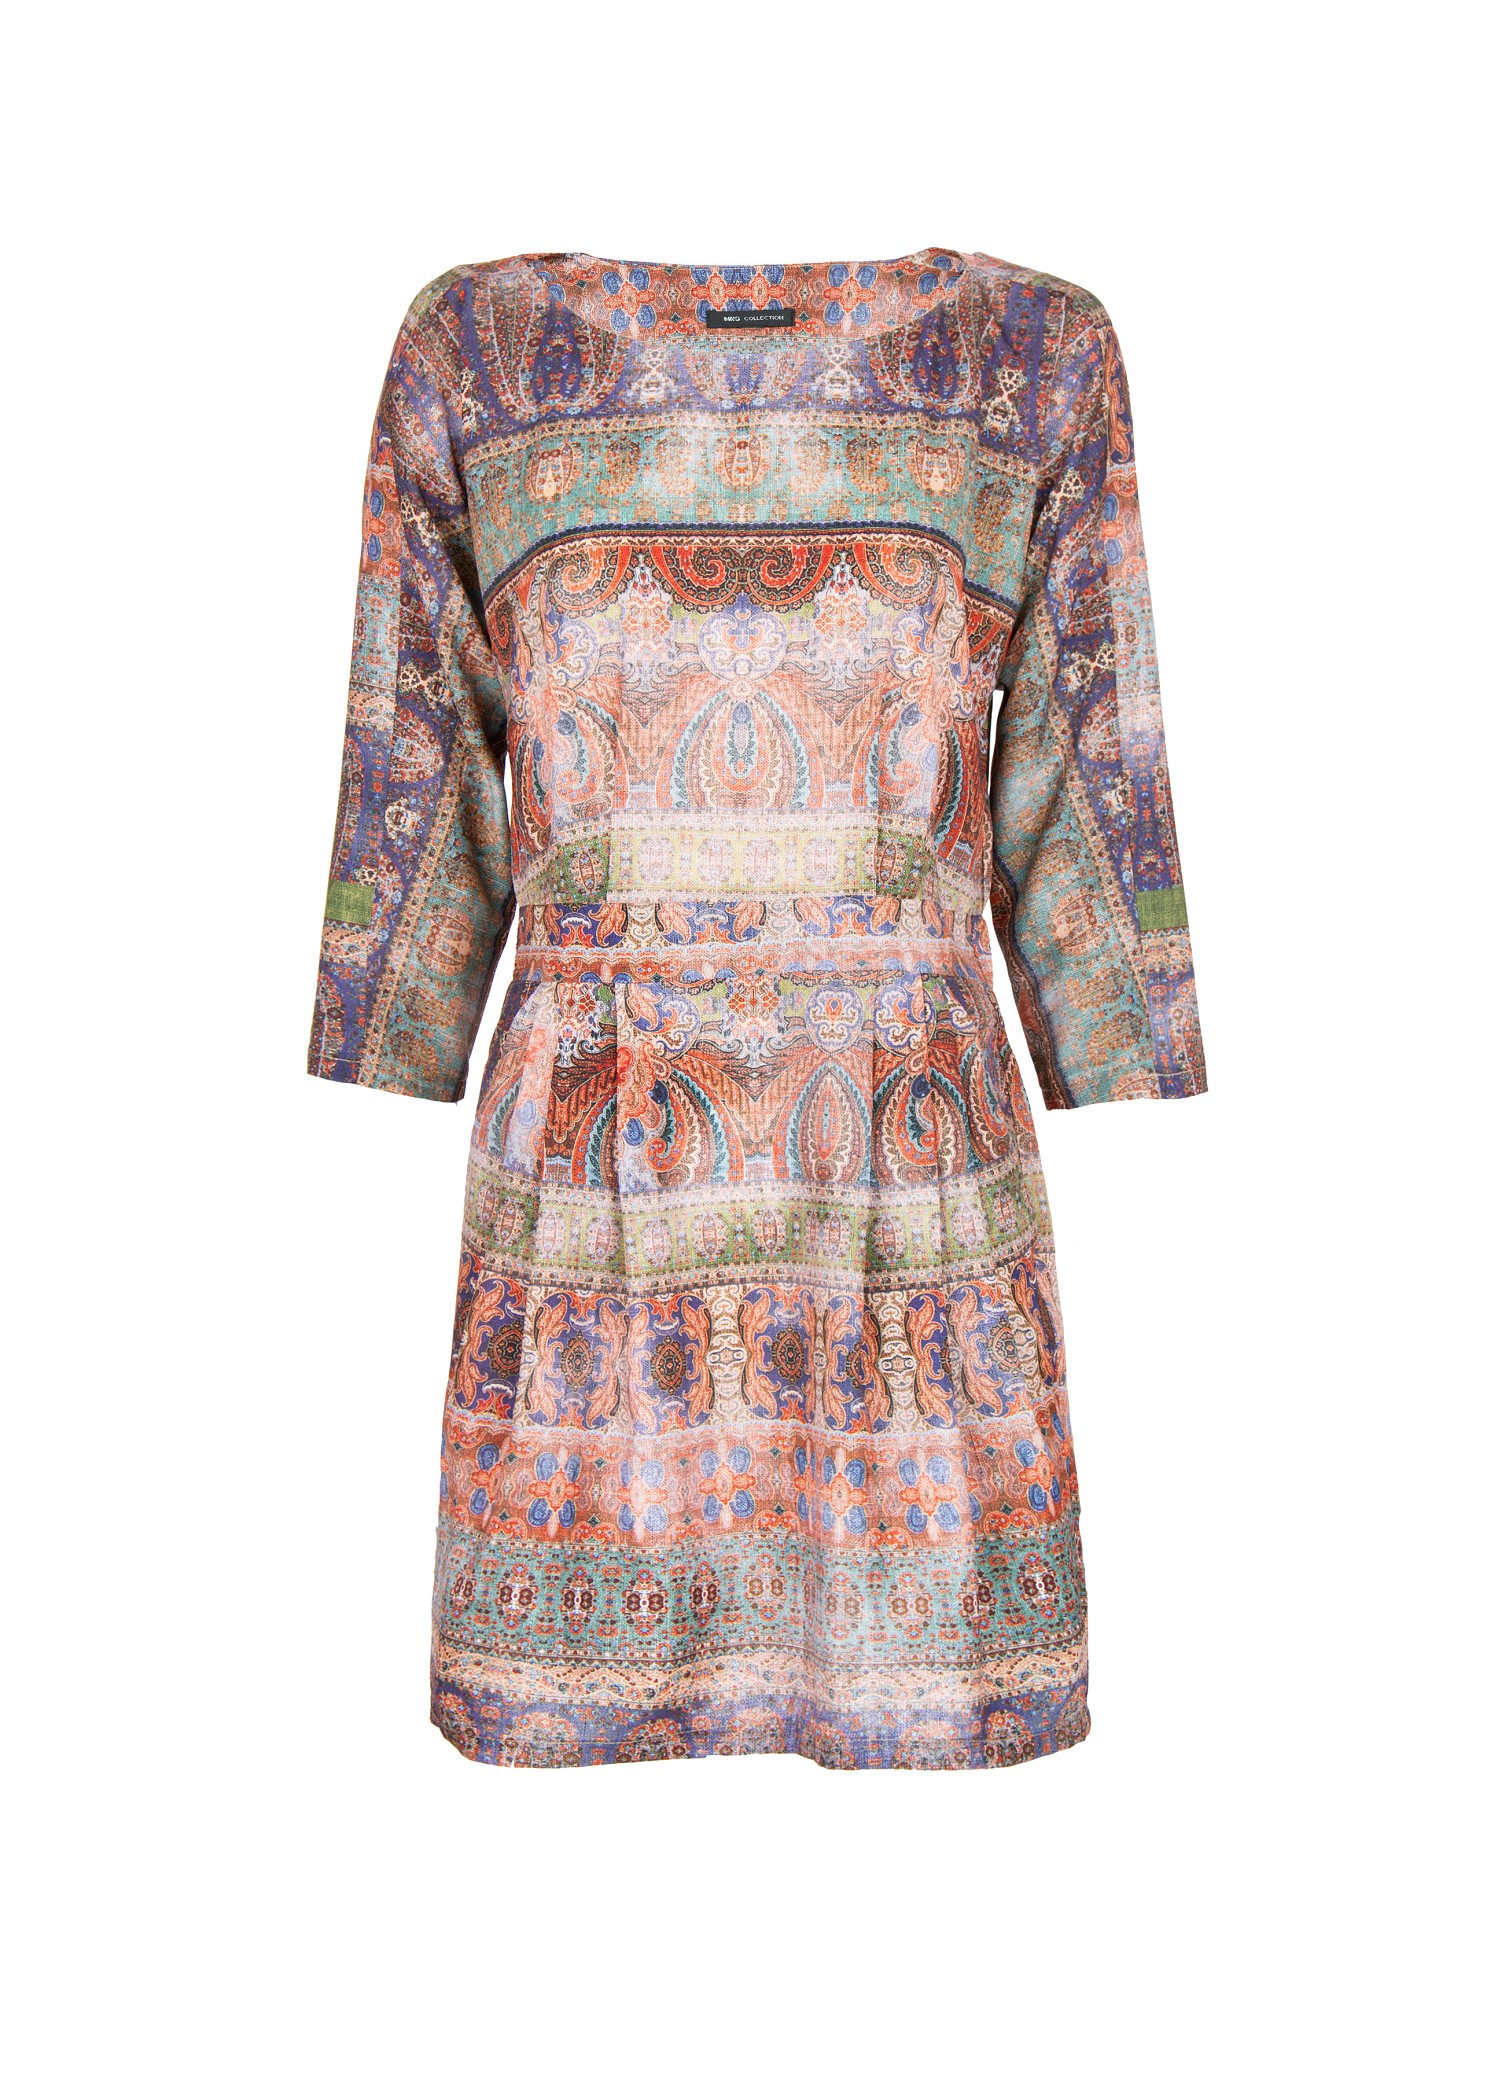 Lyst - Mango Faded Paisley Print Dress